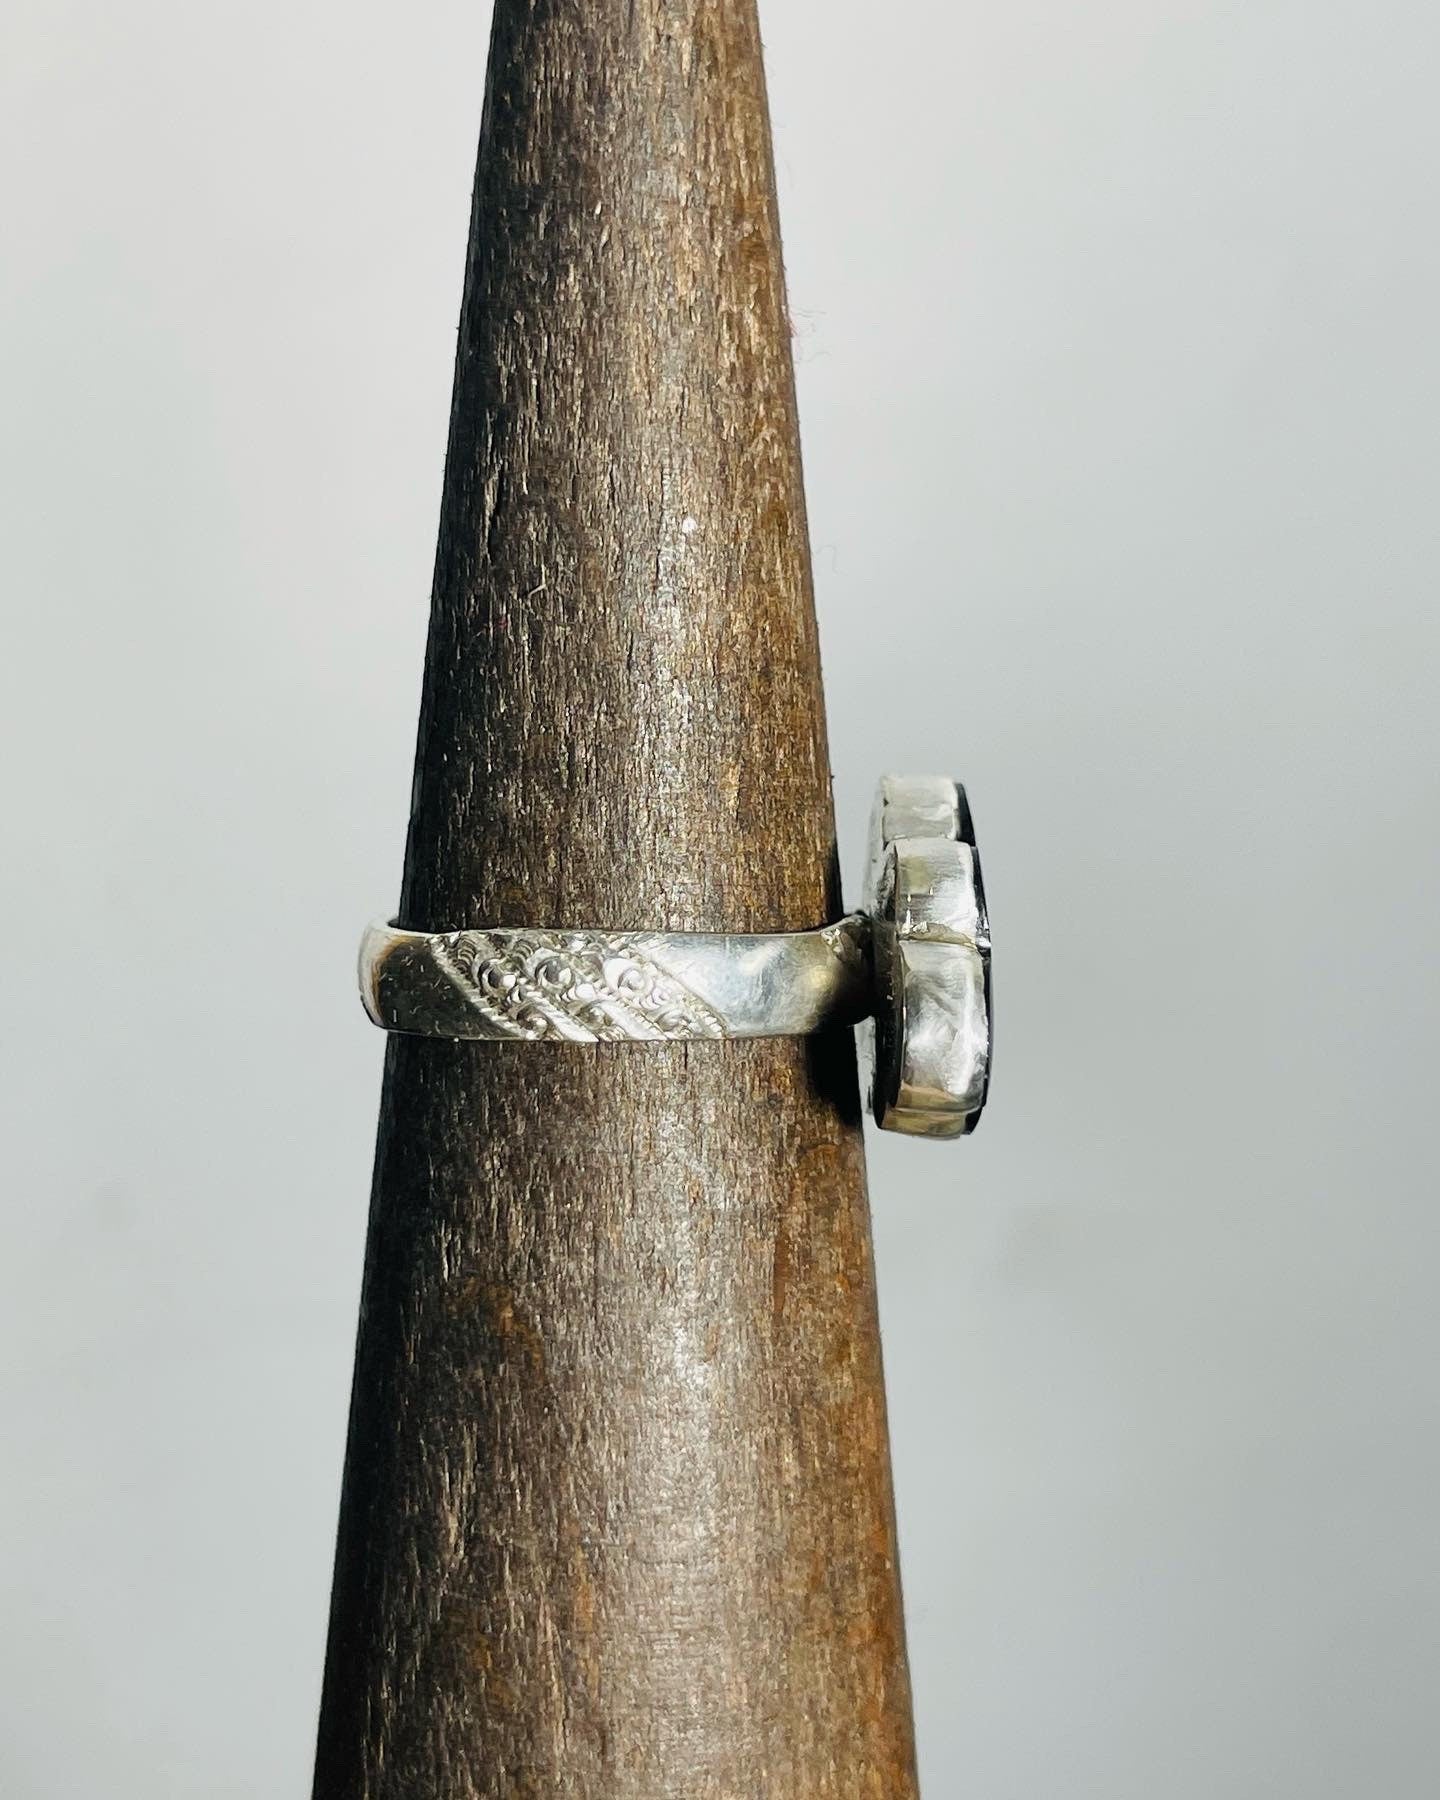 Handmade Black Onyx Cloud Cabochon Sterling Silver Ring